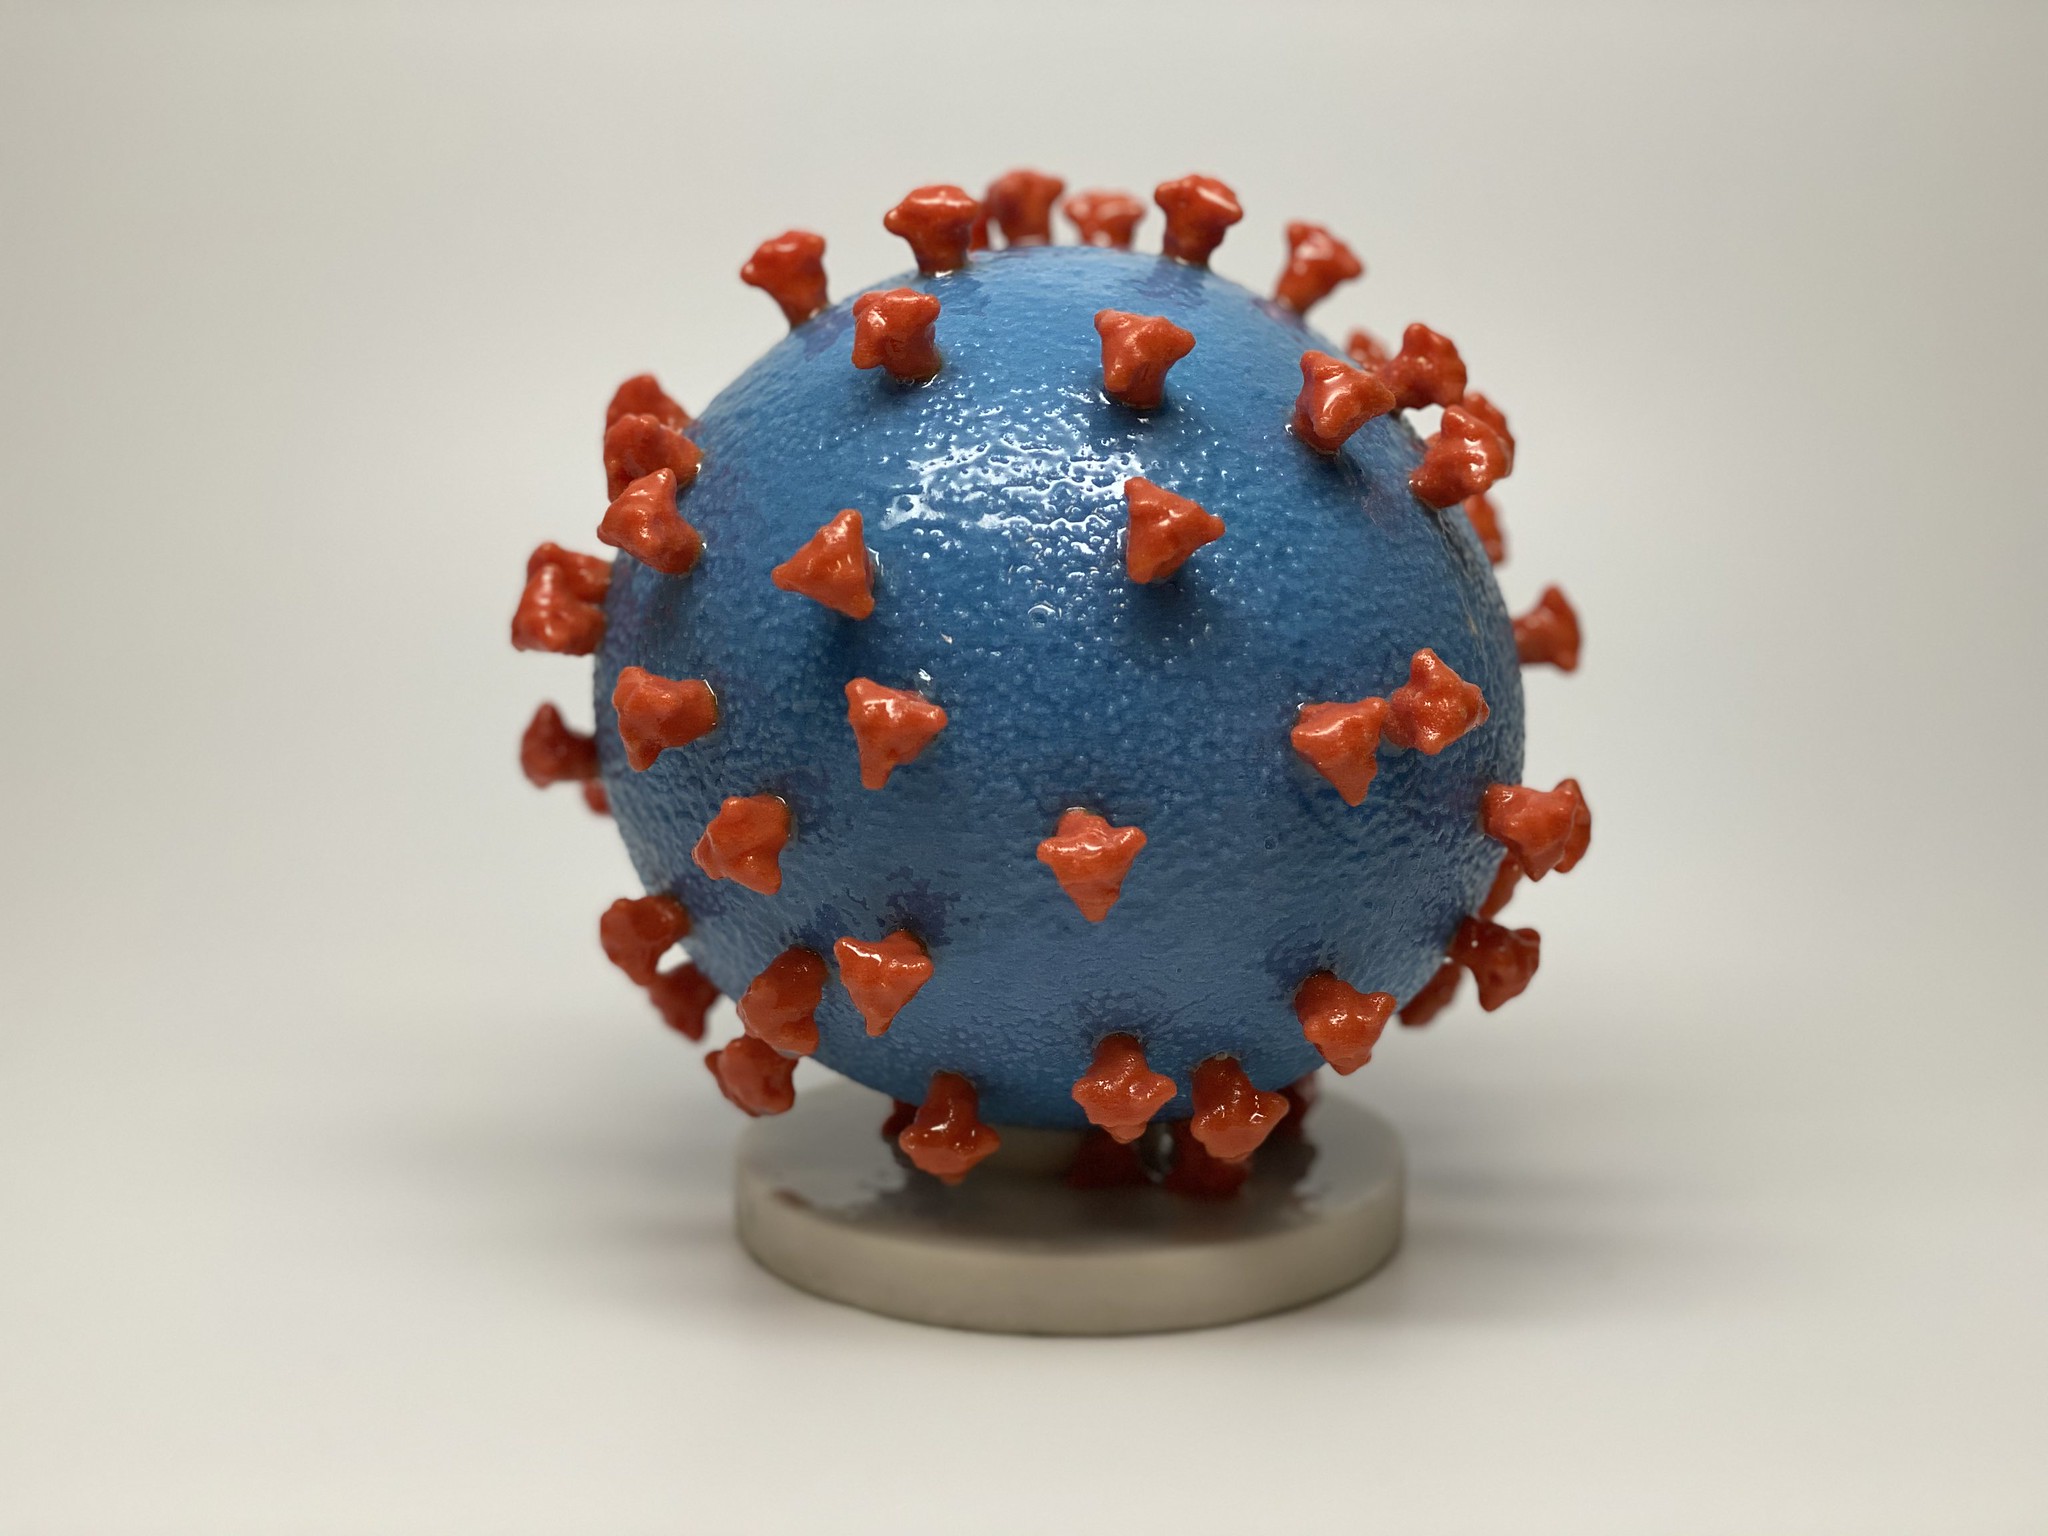 A three-dimensional printed model of a SARS-CoV-2 virus particle